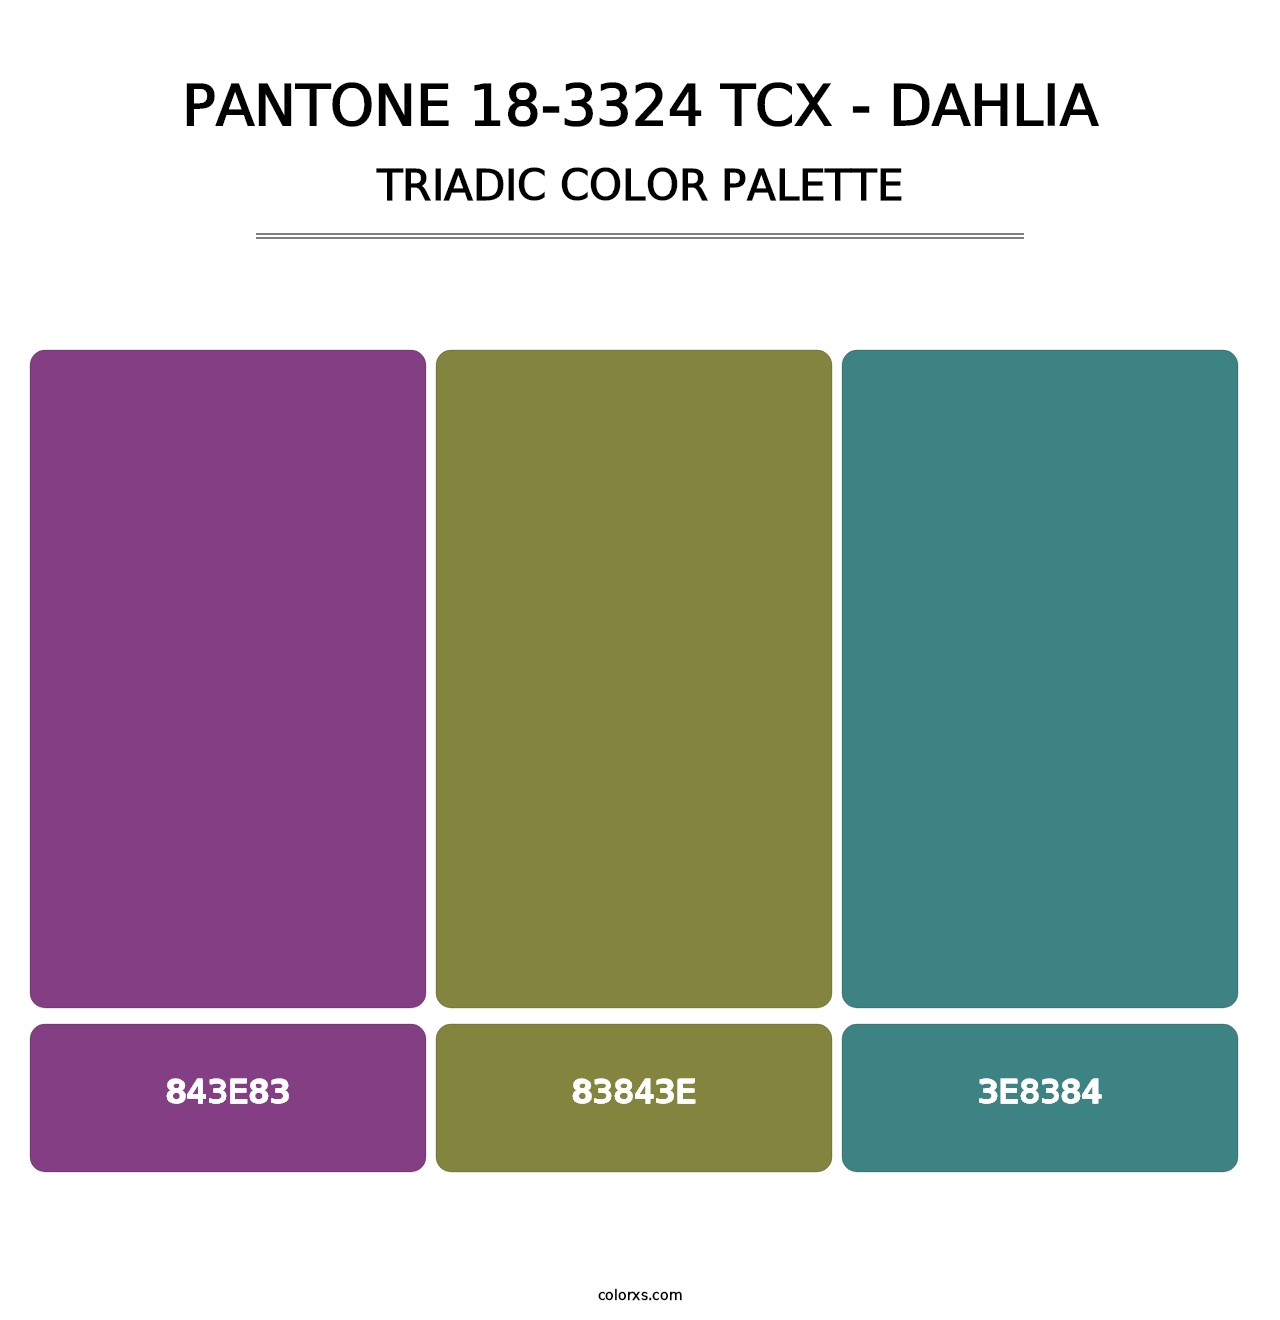 PANTONE 18-3324 TCX - Dahlia - Triadic Color Palette